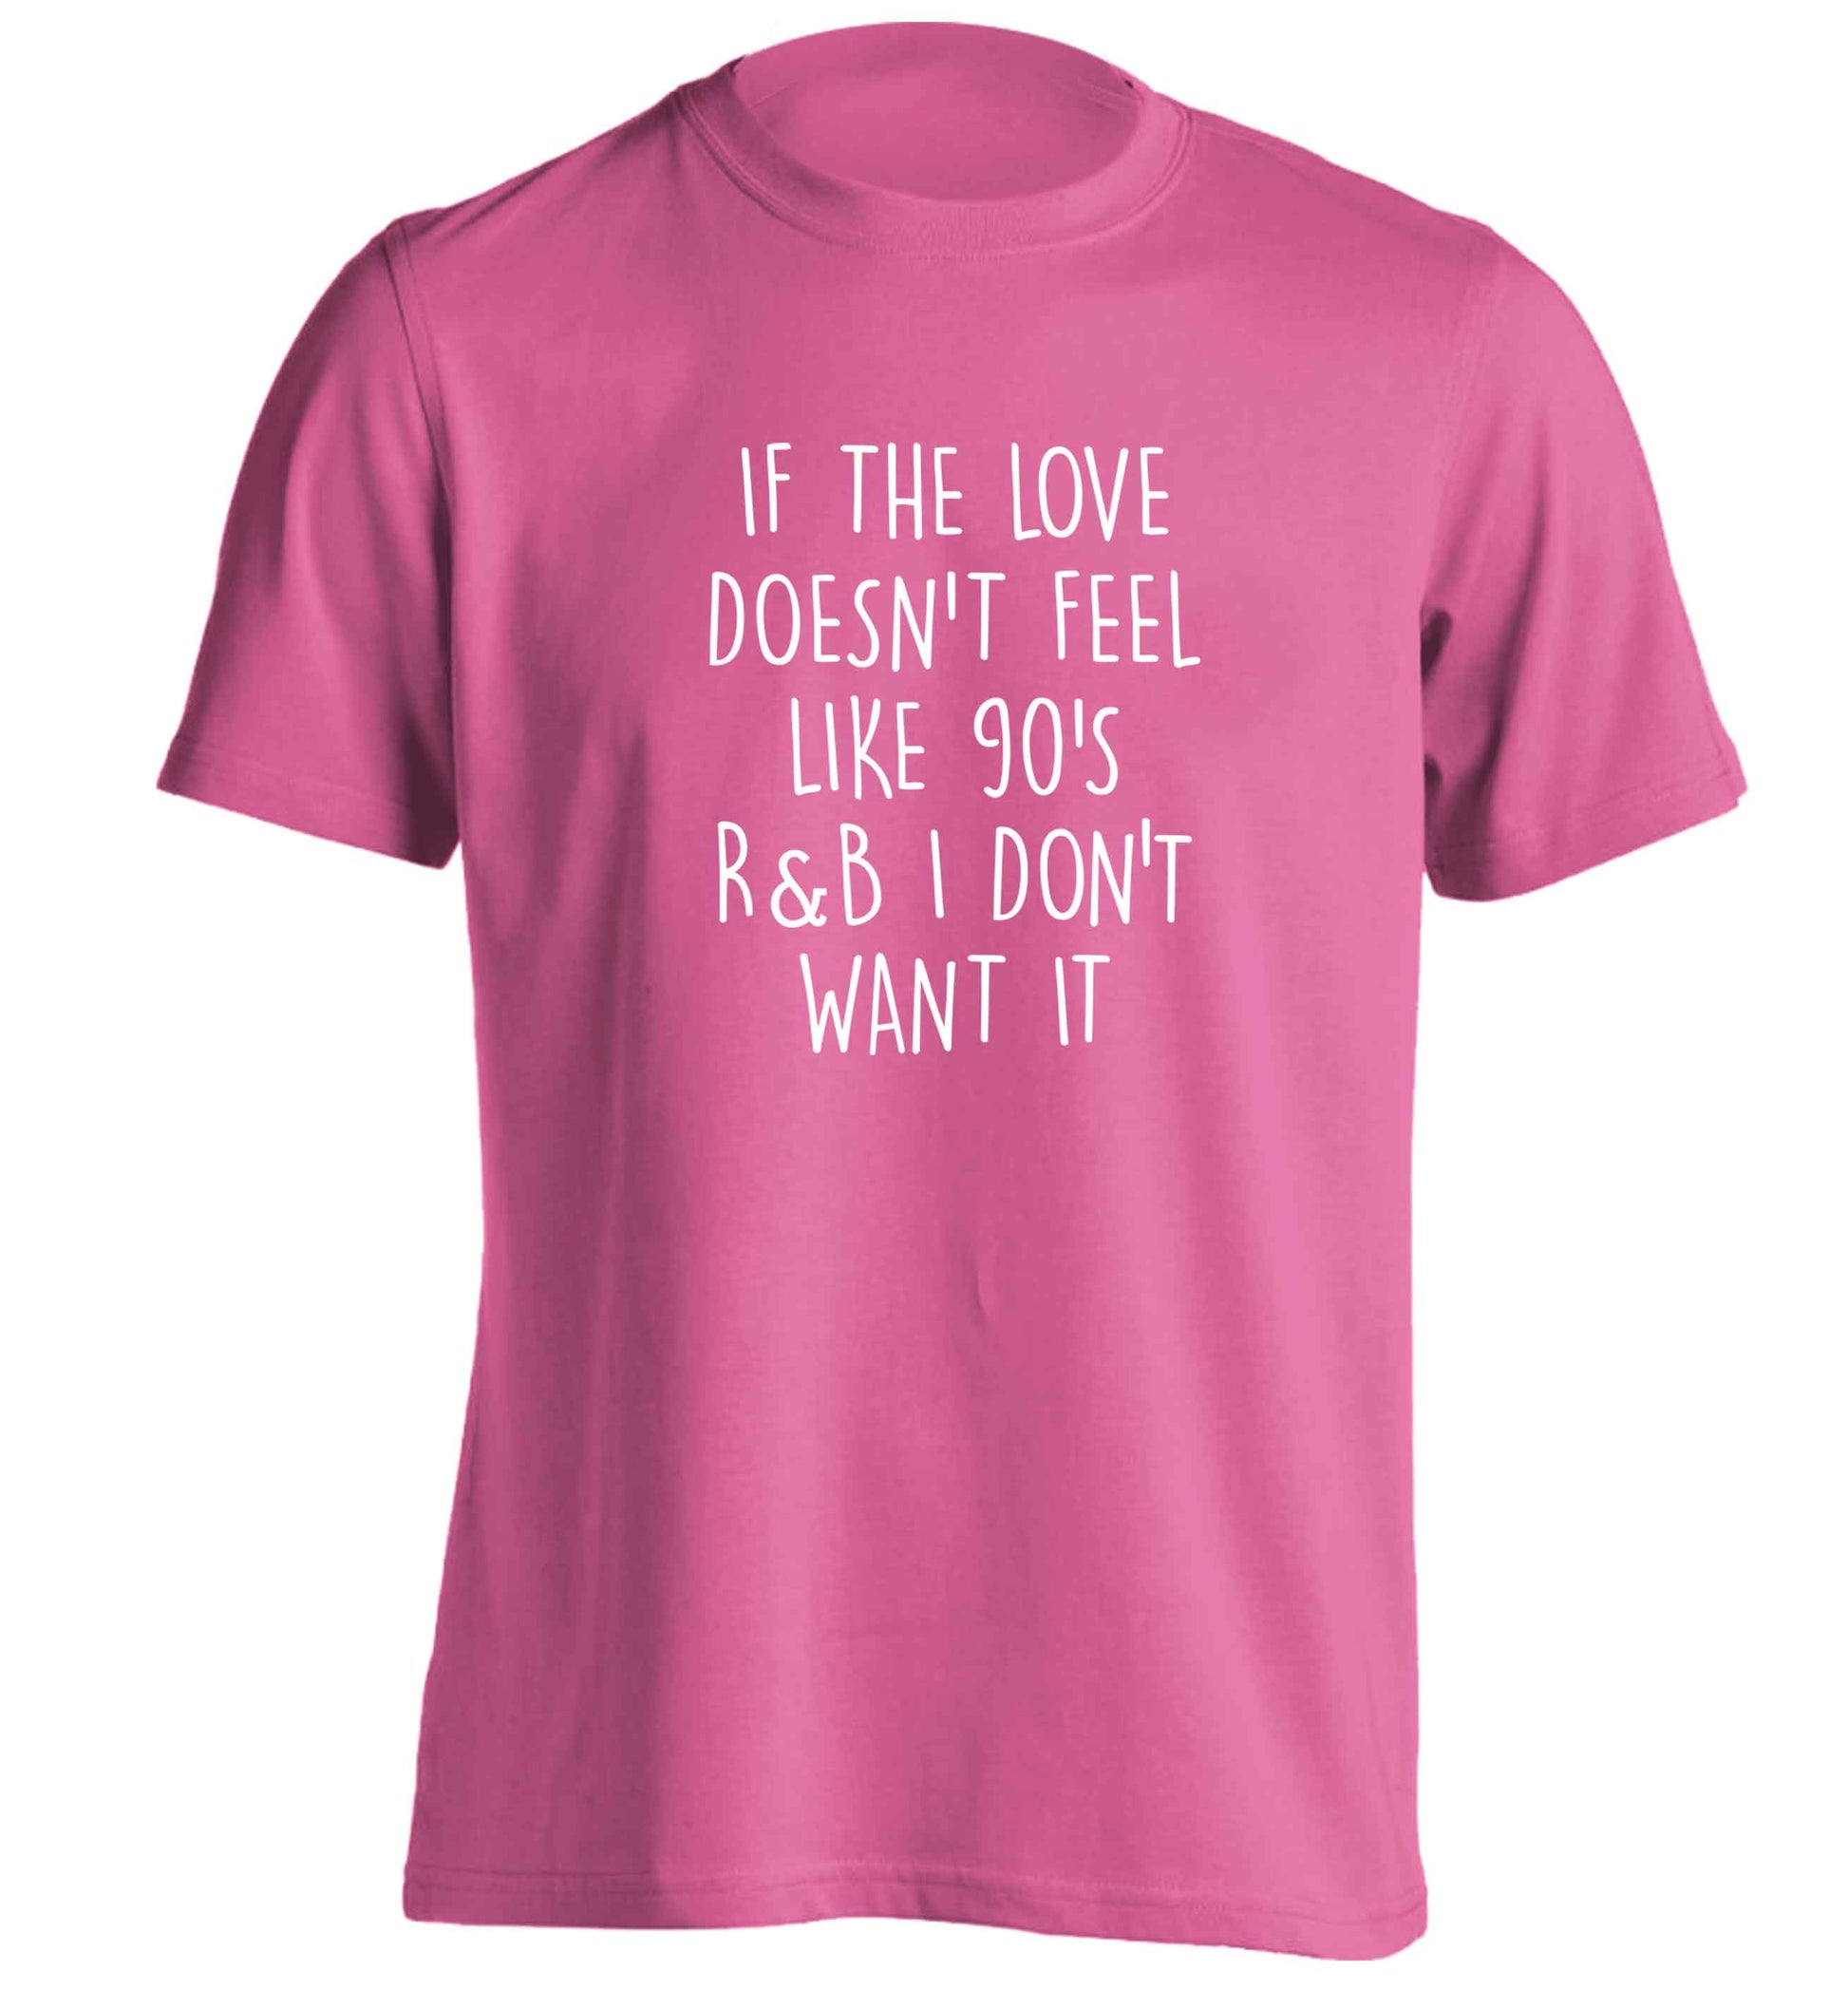 If the love doesn't feel like 90's r&b I don't want it adults unisex pink Tshirt 2XL